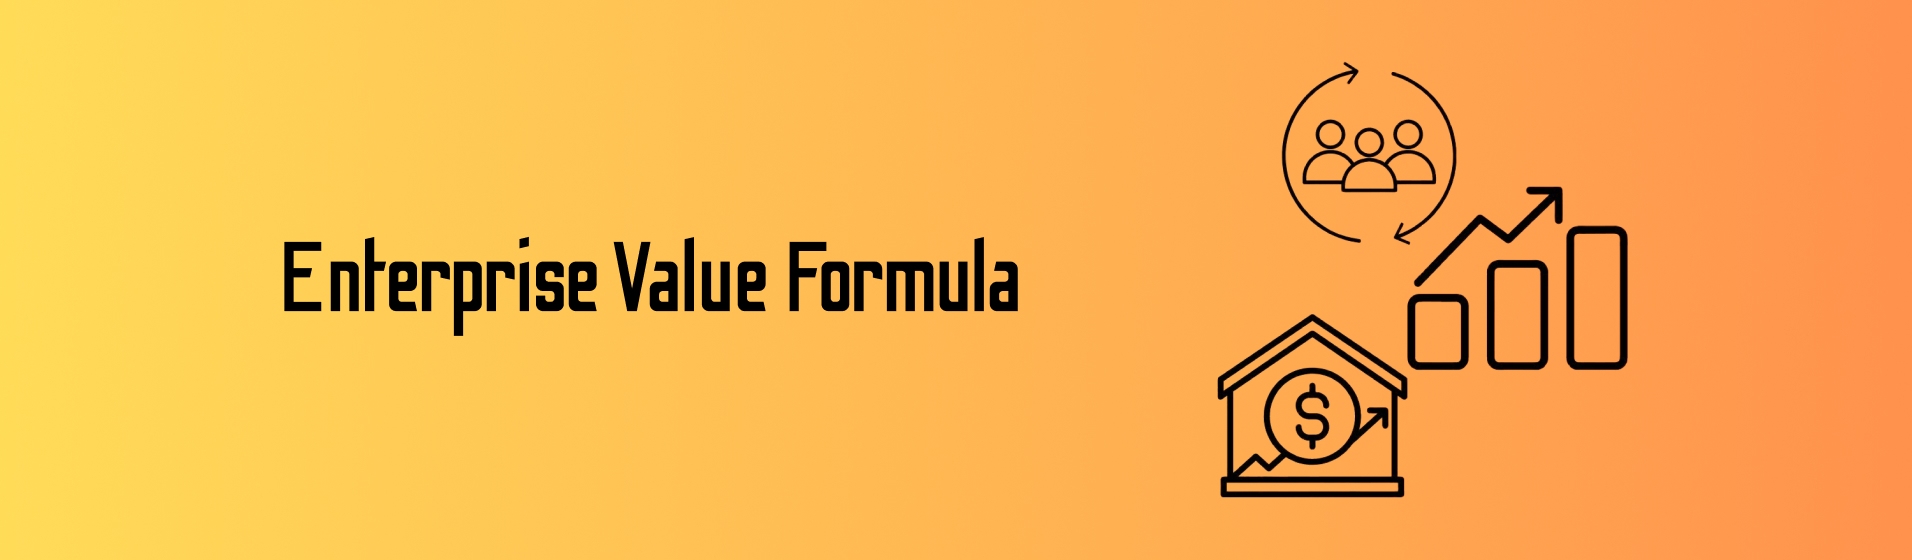 enterprise value formula